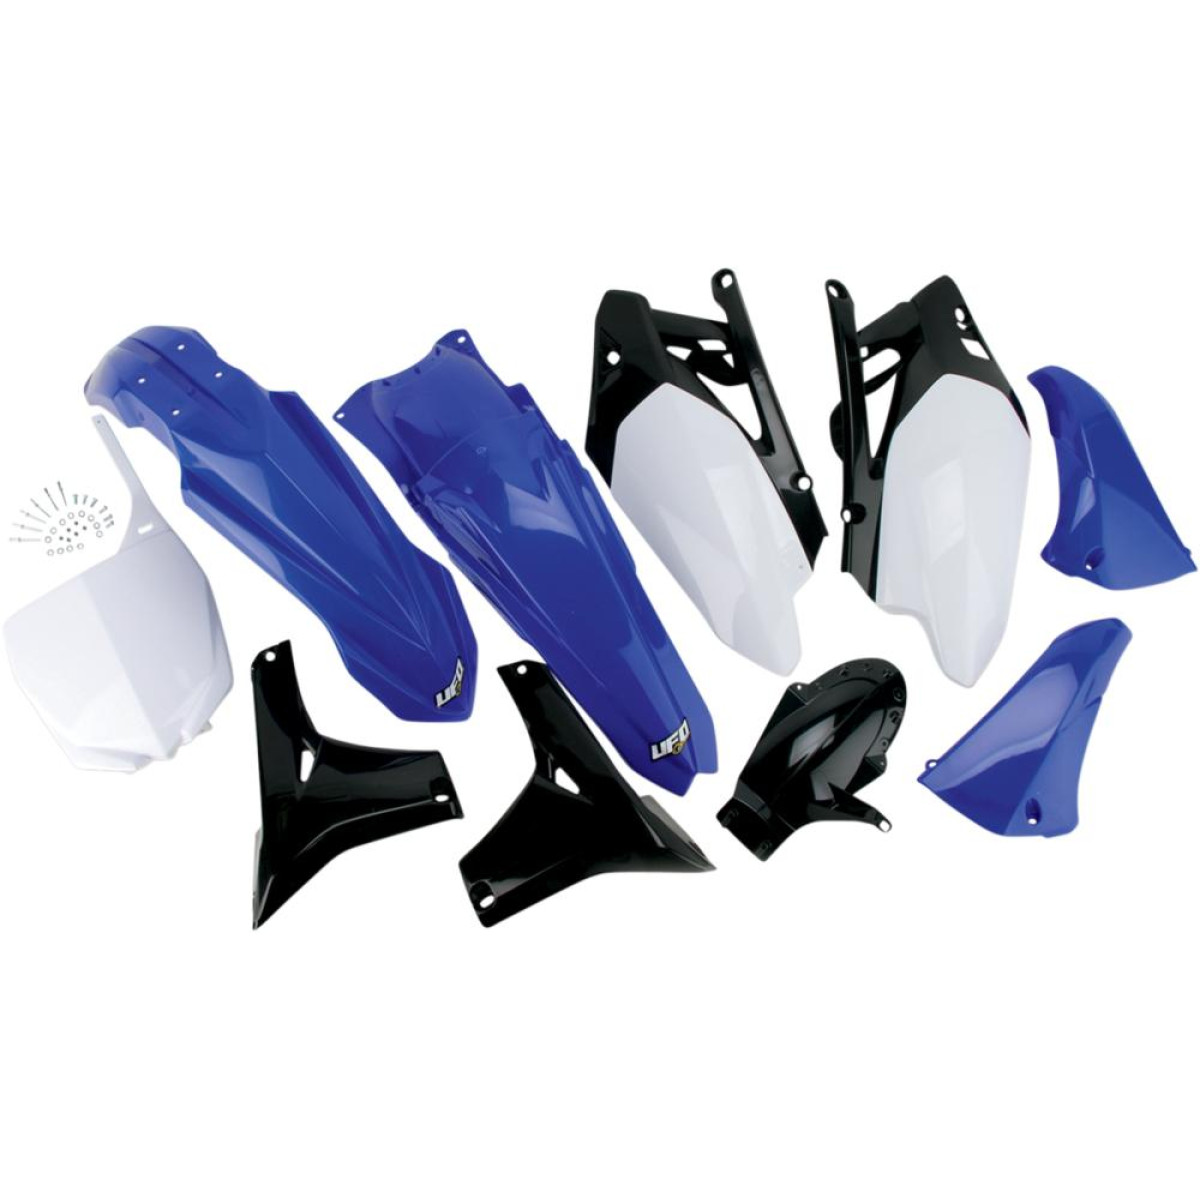 Kit plastice yamaha yzf450 2010, albastru/alb/negru, culoare oem